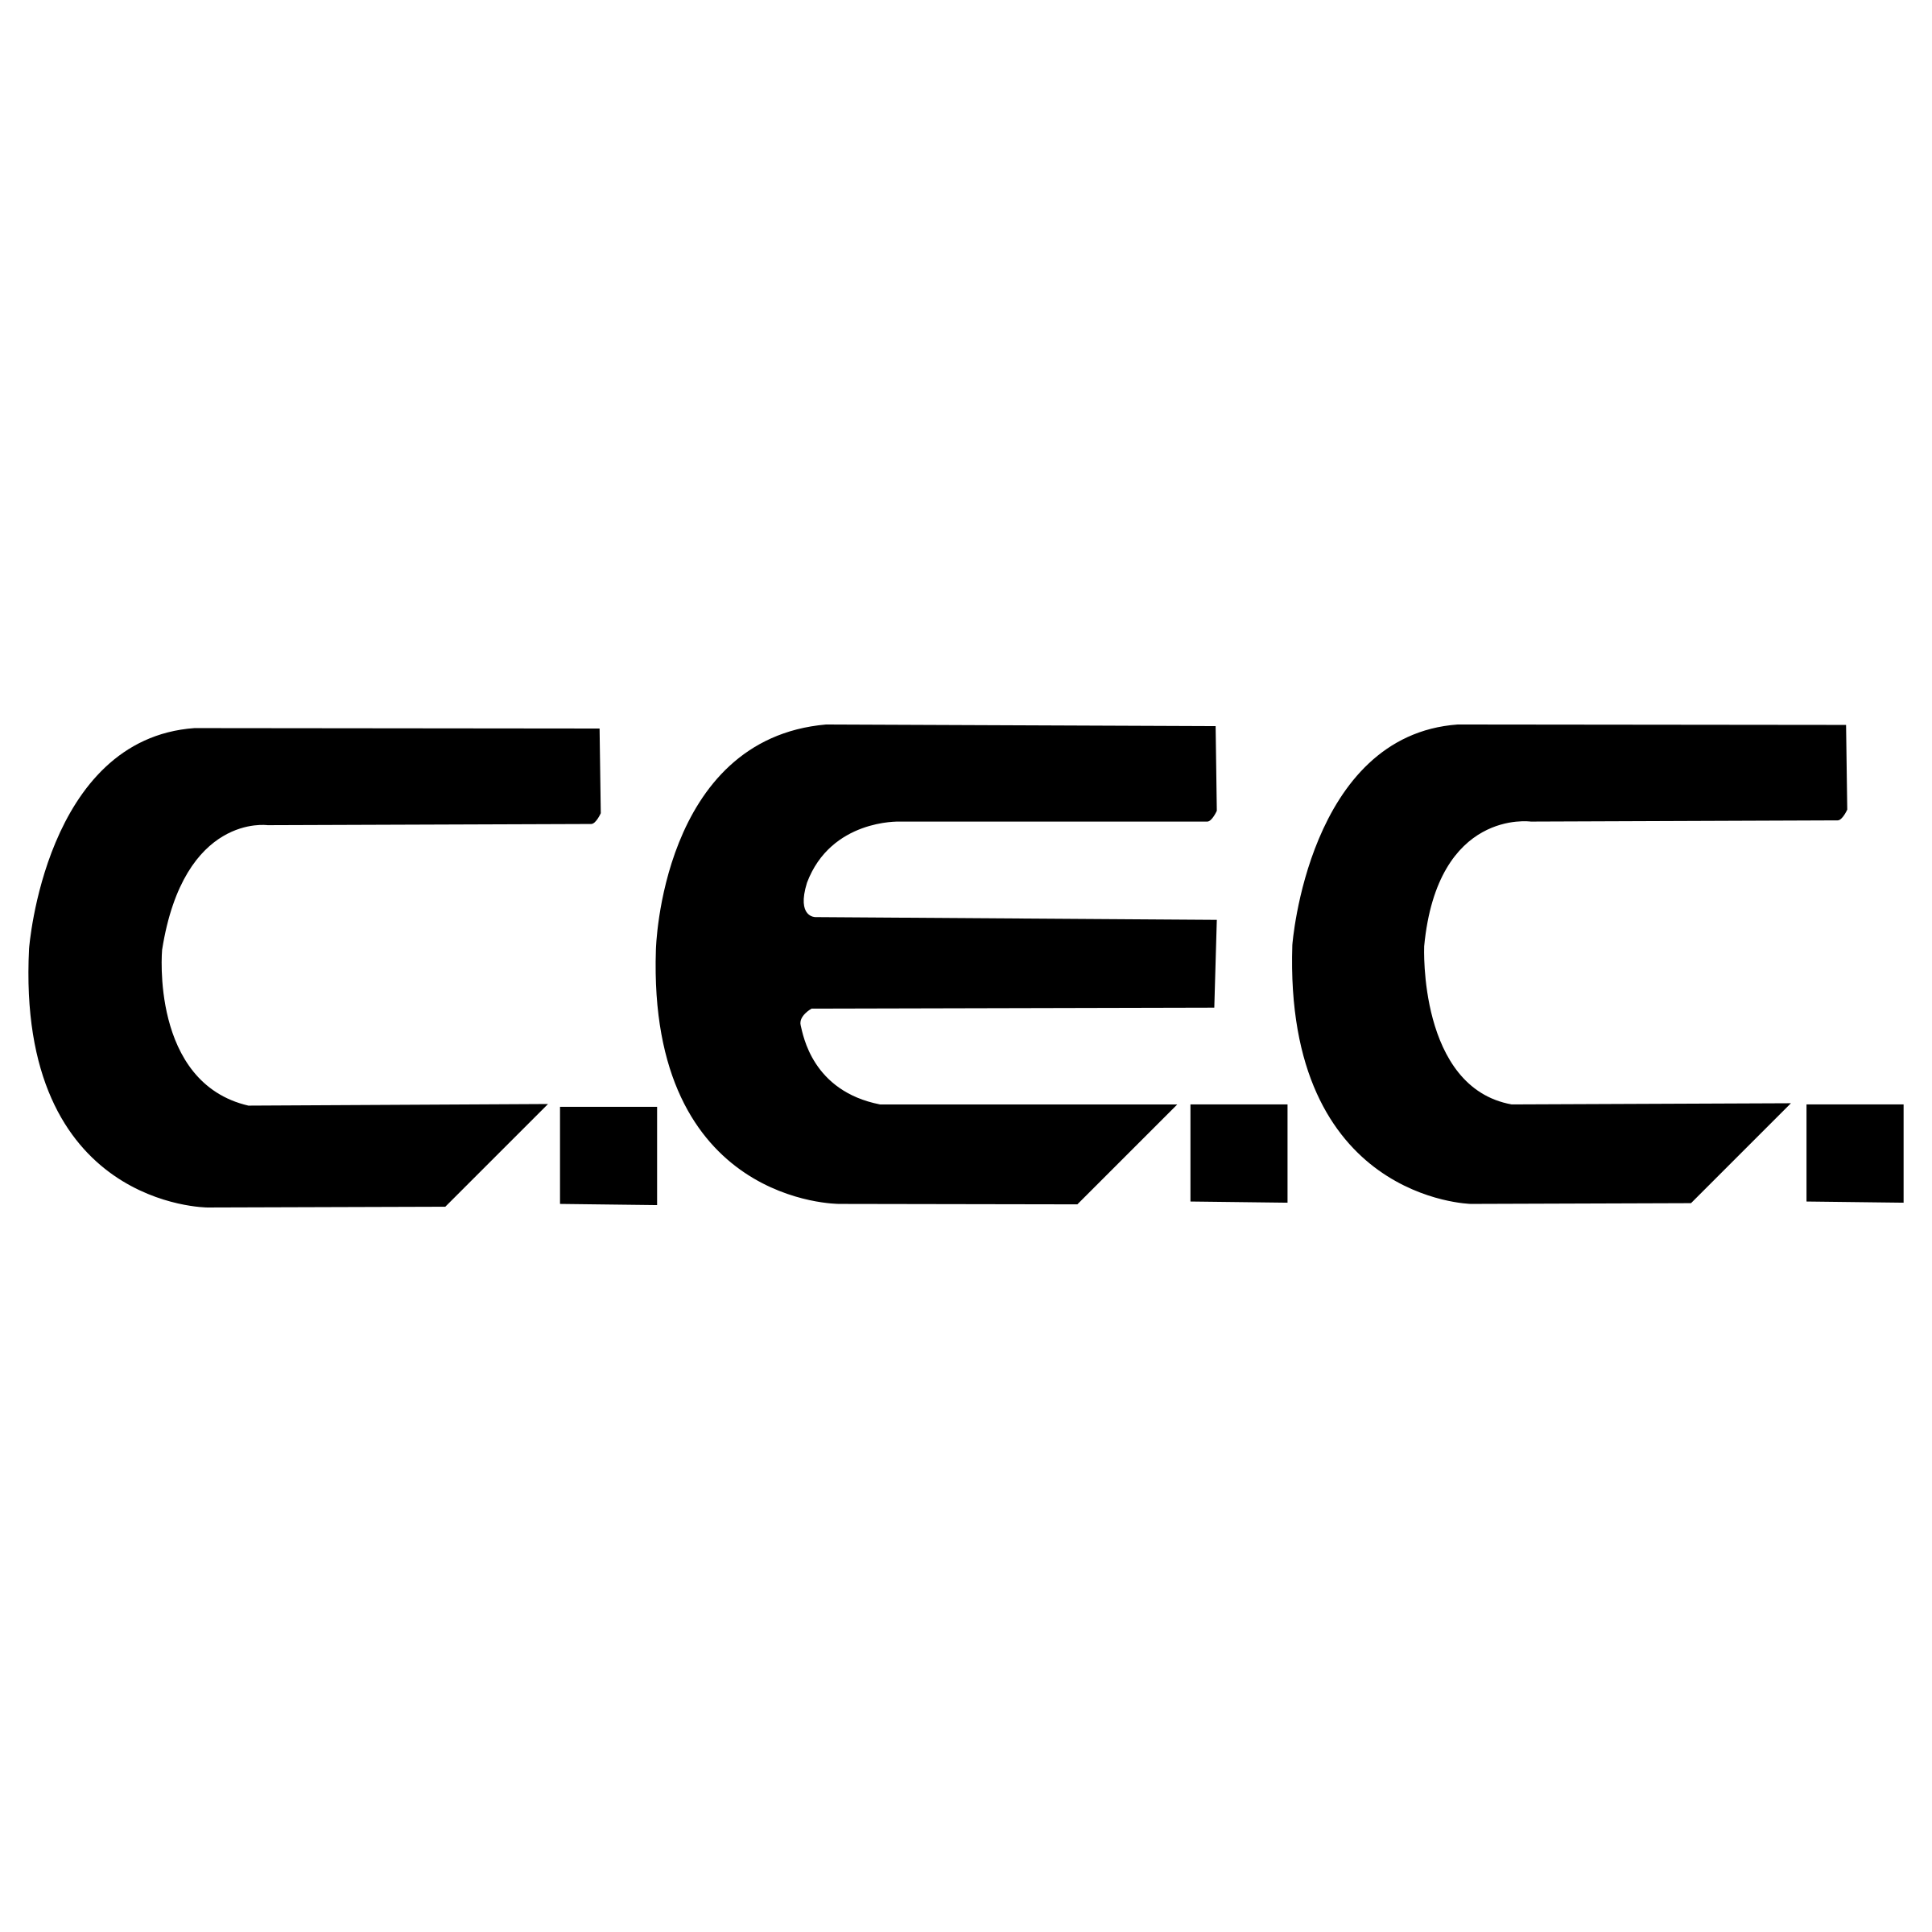 CEC Logo - CEC Logo PNG Transparent & SVG Vector - Freebie Supply